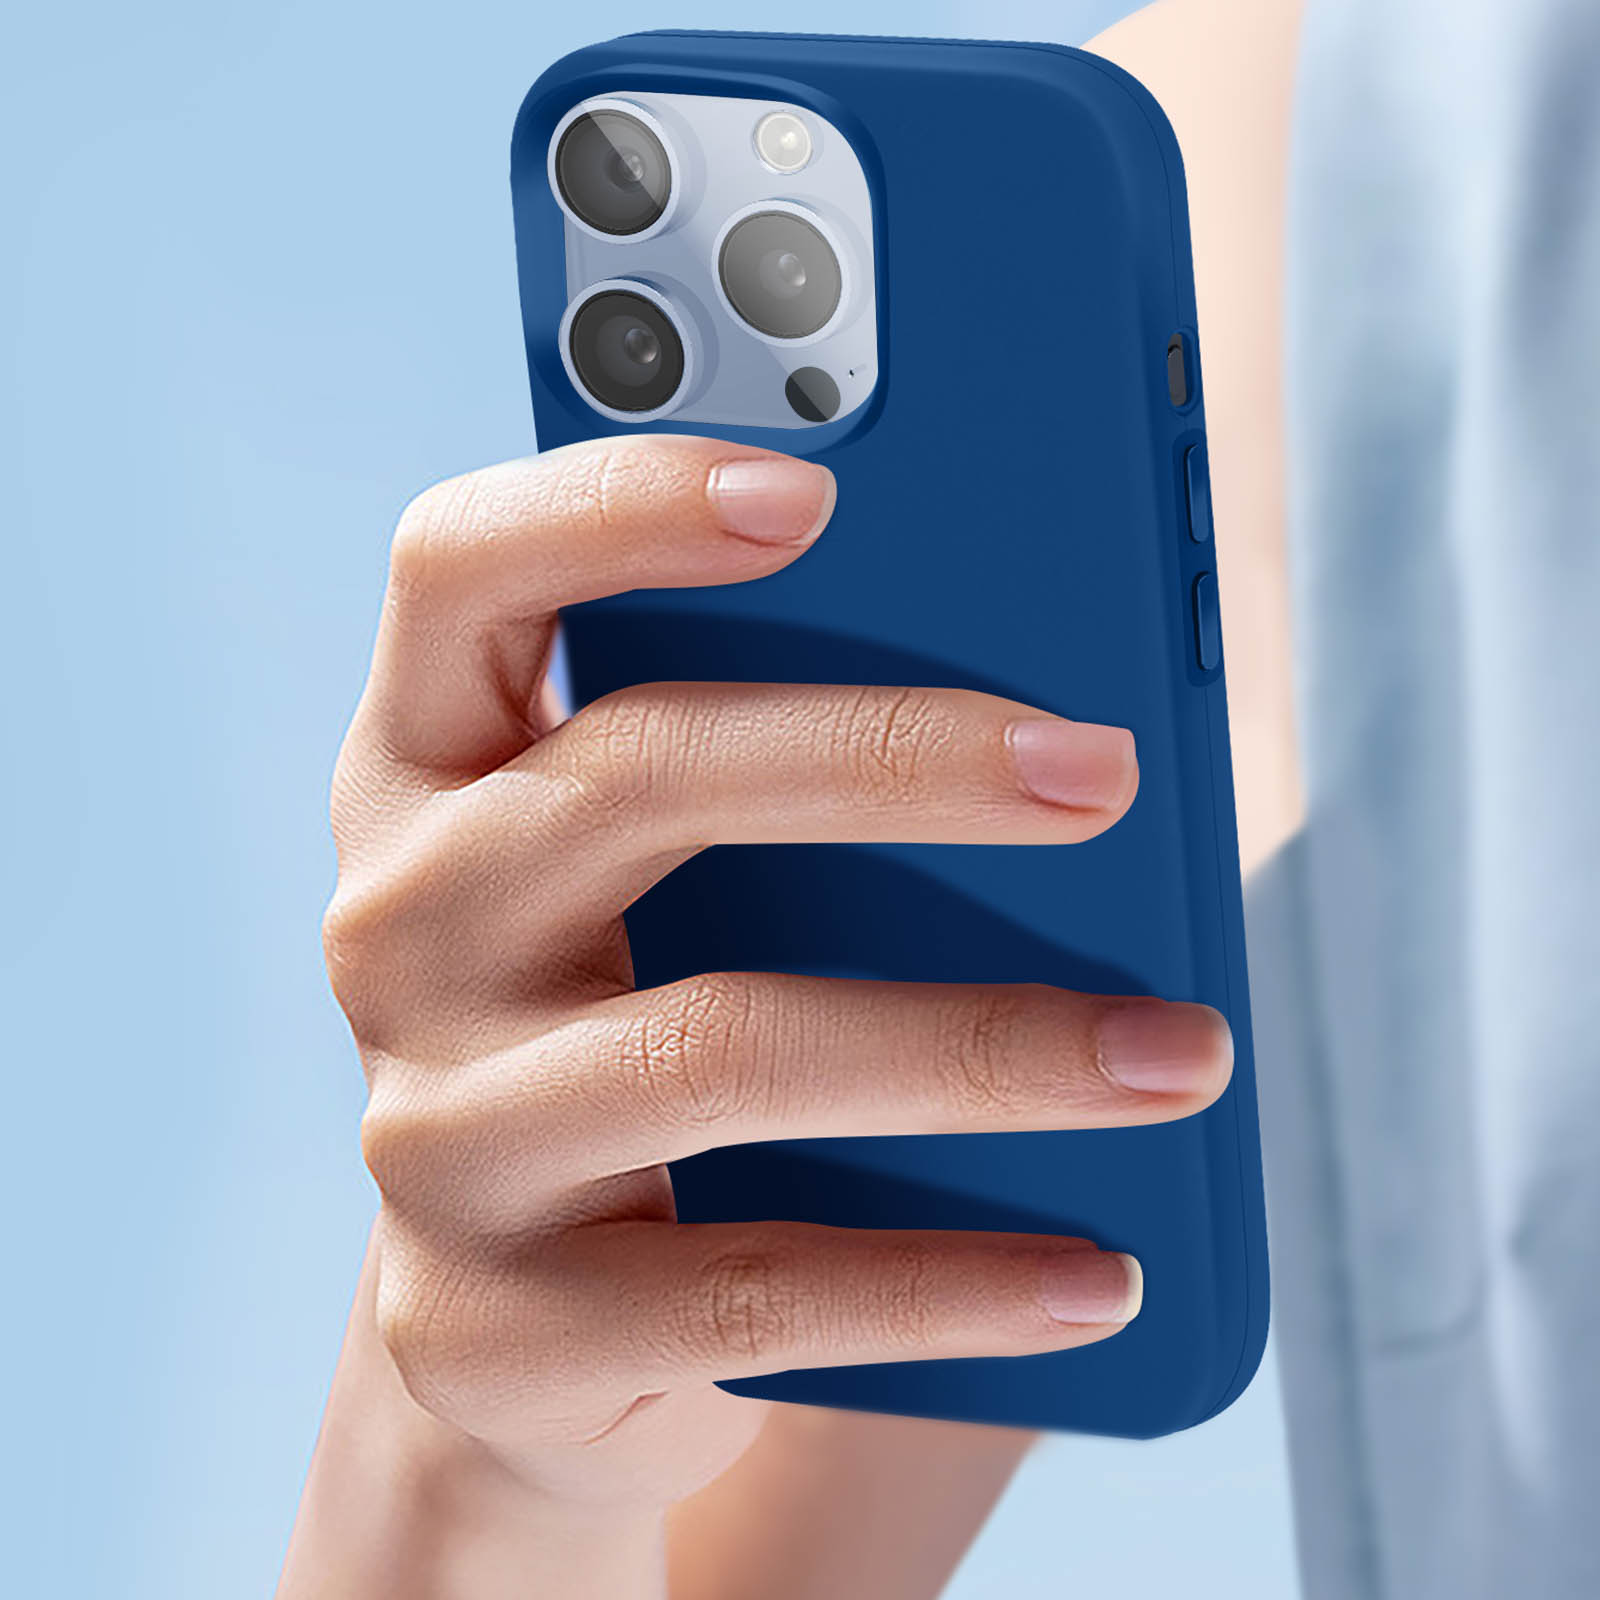 Funda Silicona interior de micro fibra Apple iPhone 7 / 8 Azul Marino